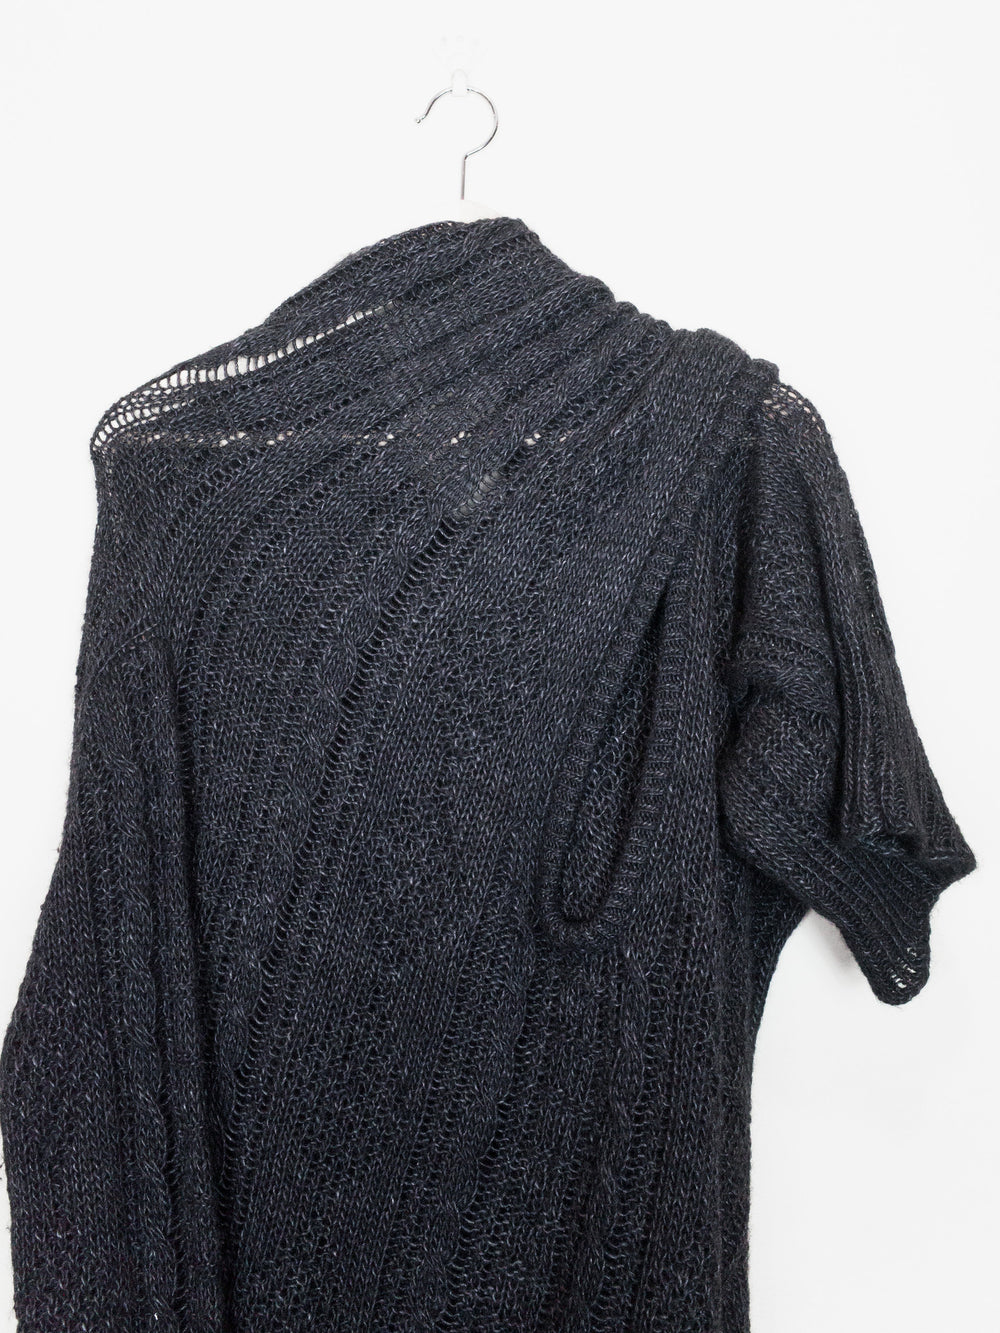 Yohji Yamamoto Y's Deformation Knit